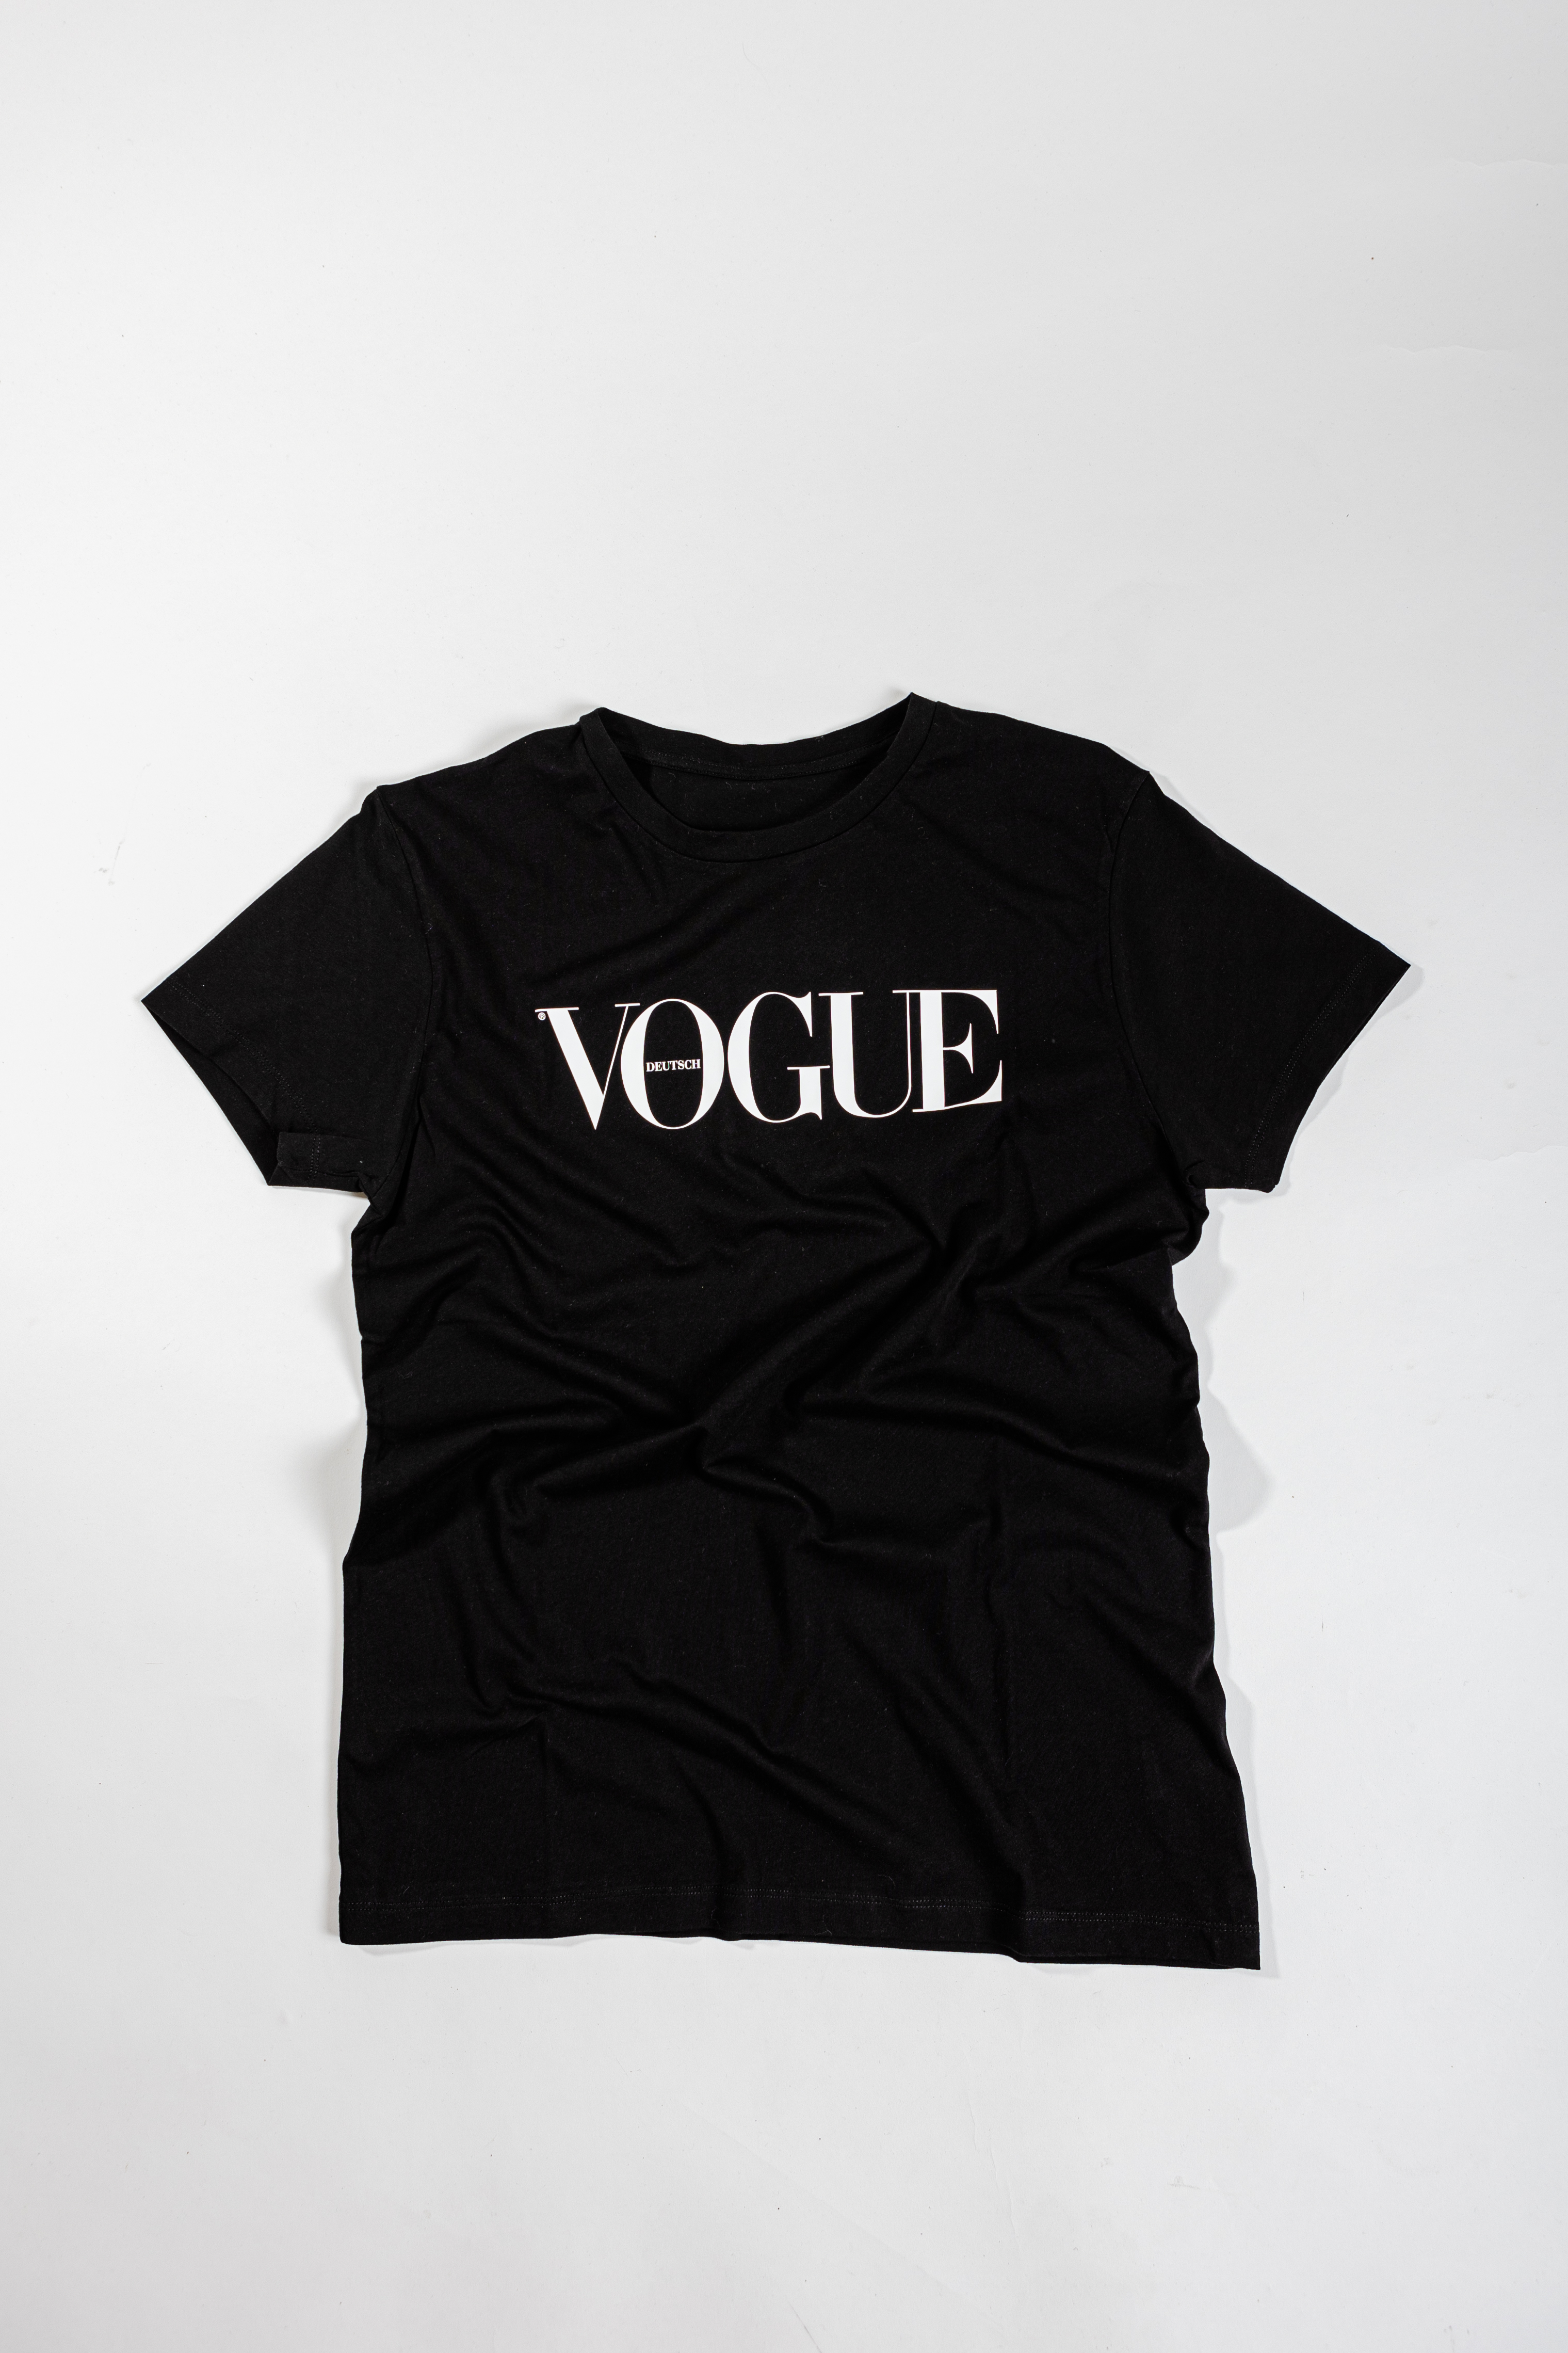 VOGUE T-Shirt schwarz L